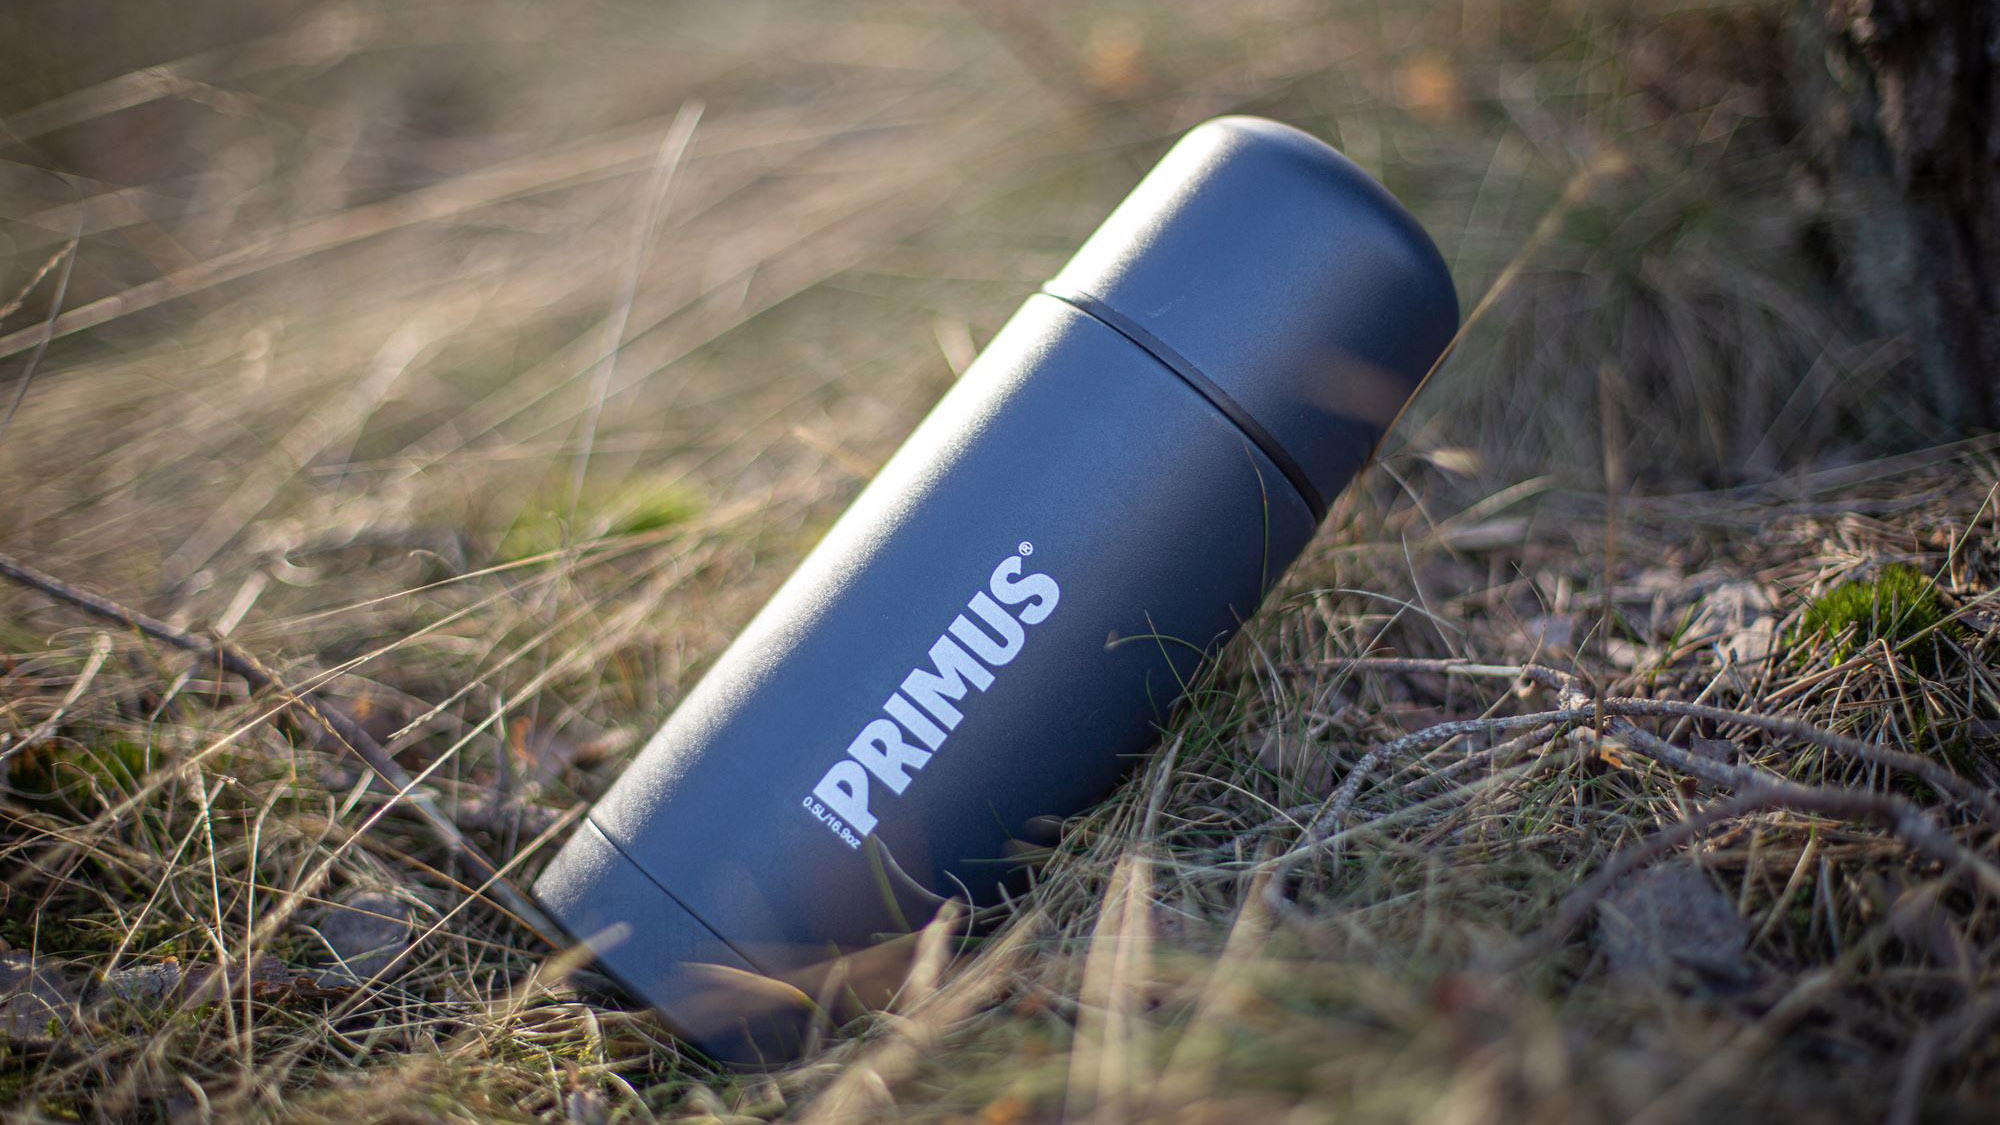 PRIMUS Vacuum Bottle 0,5l - Navy - Kolorowy termos turystyczny